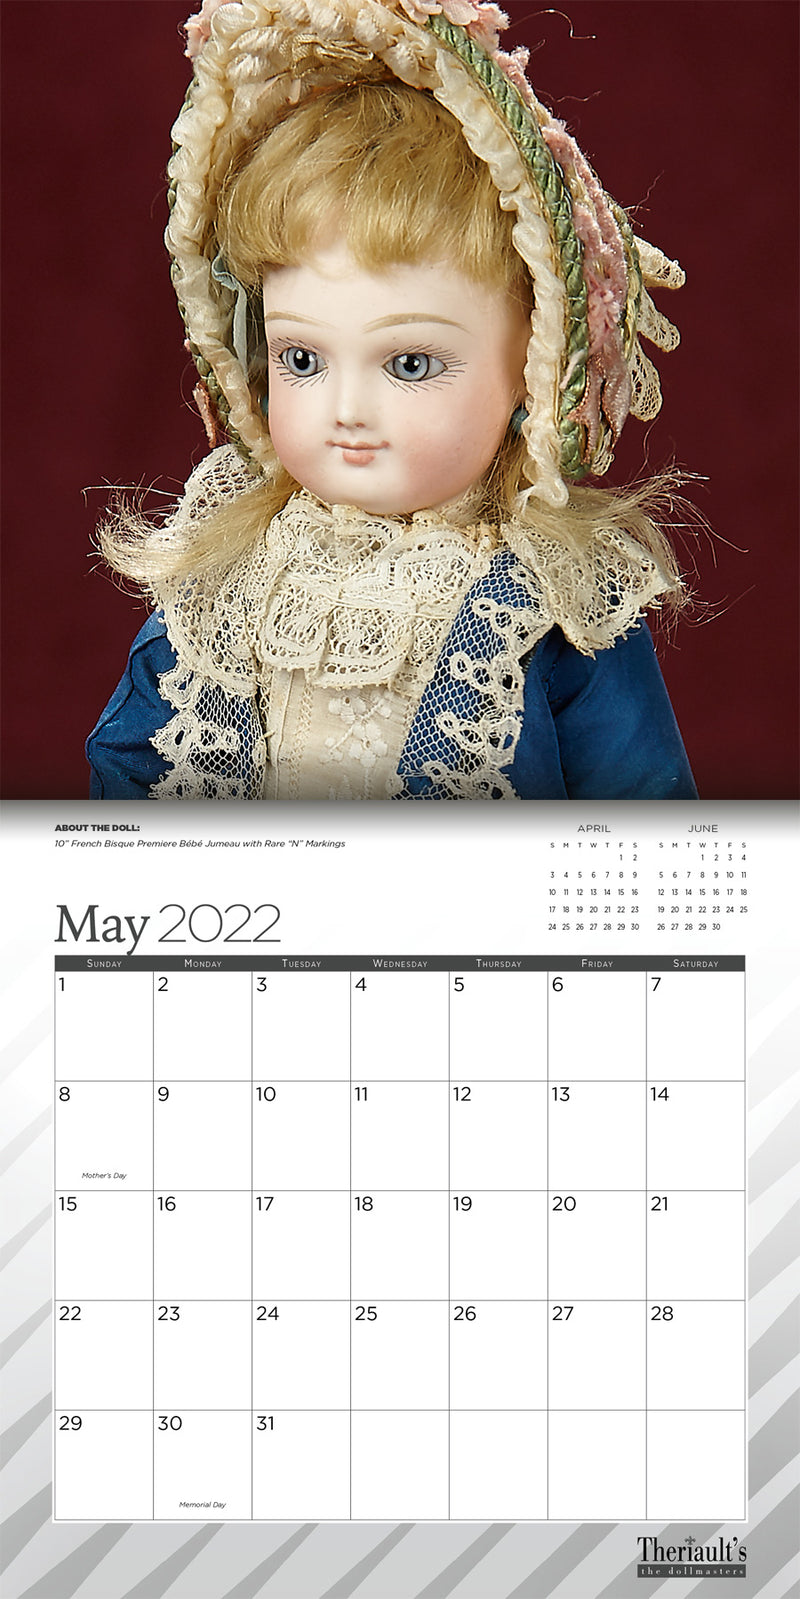 2022 Calendar of Dolls